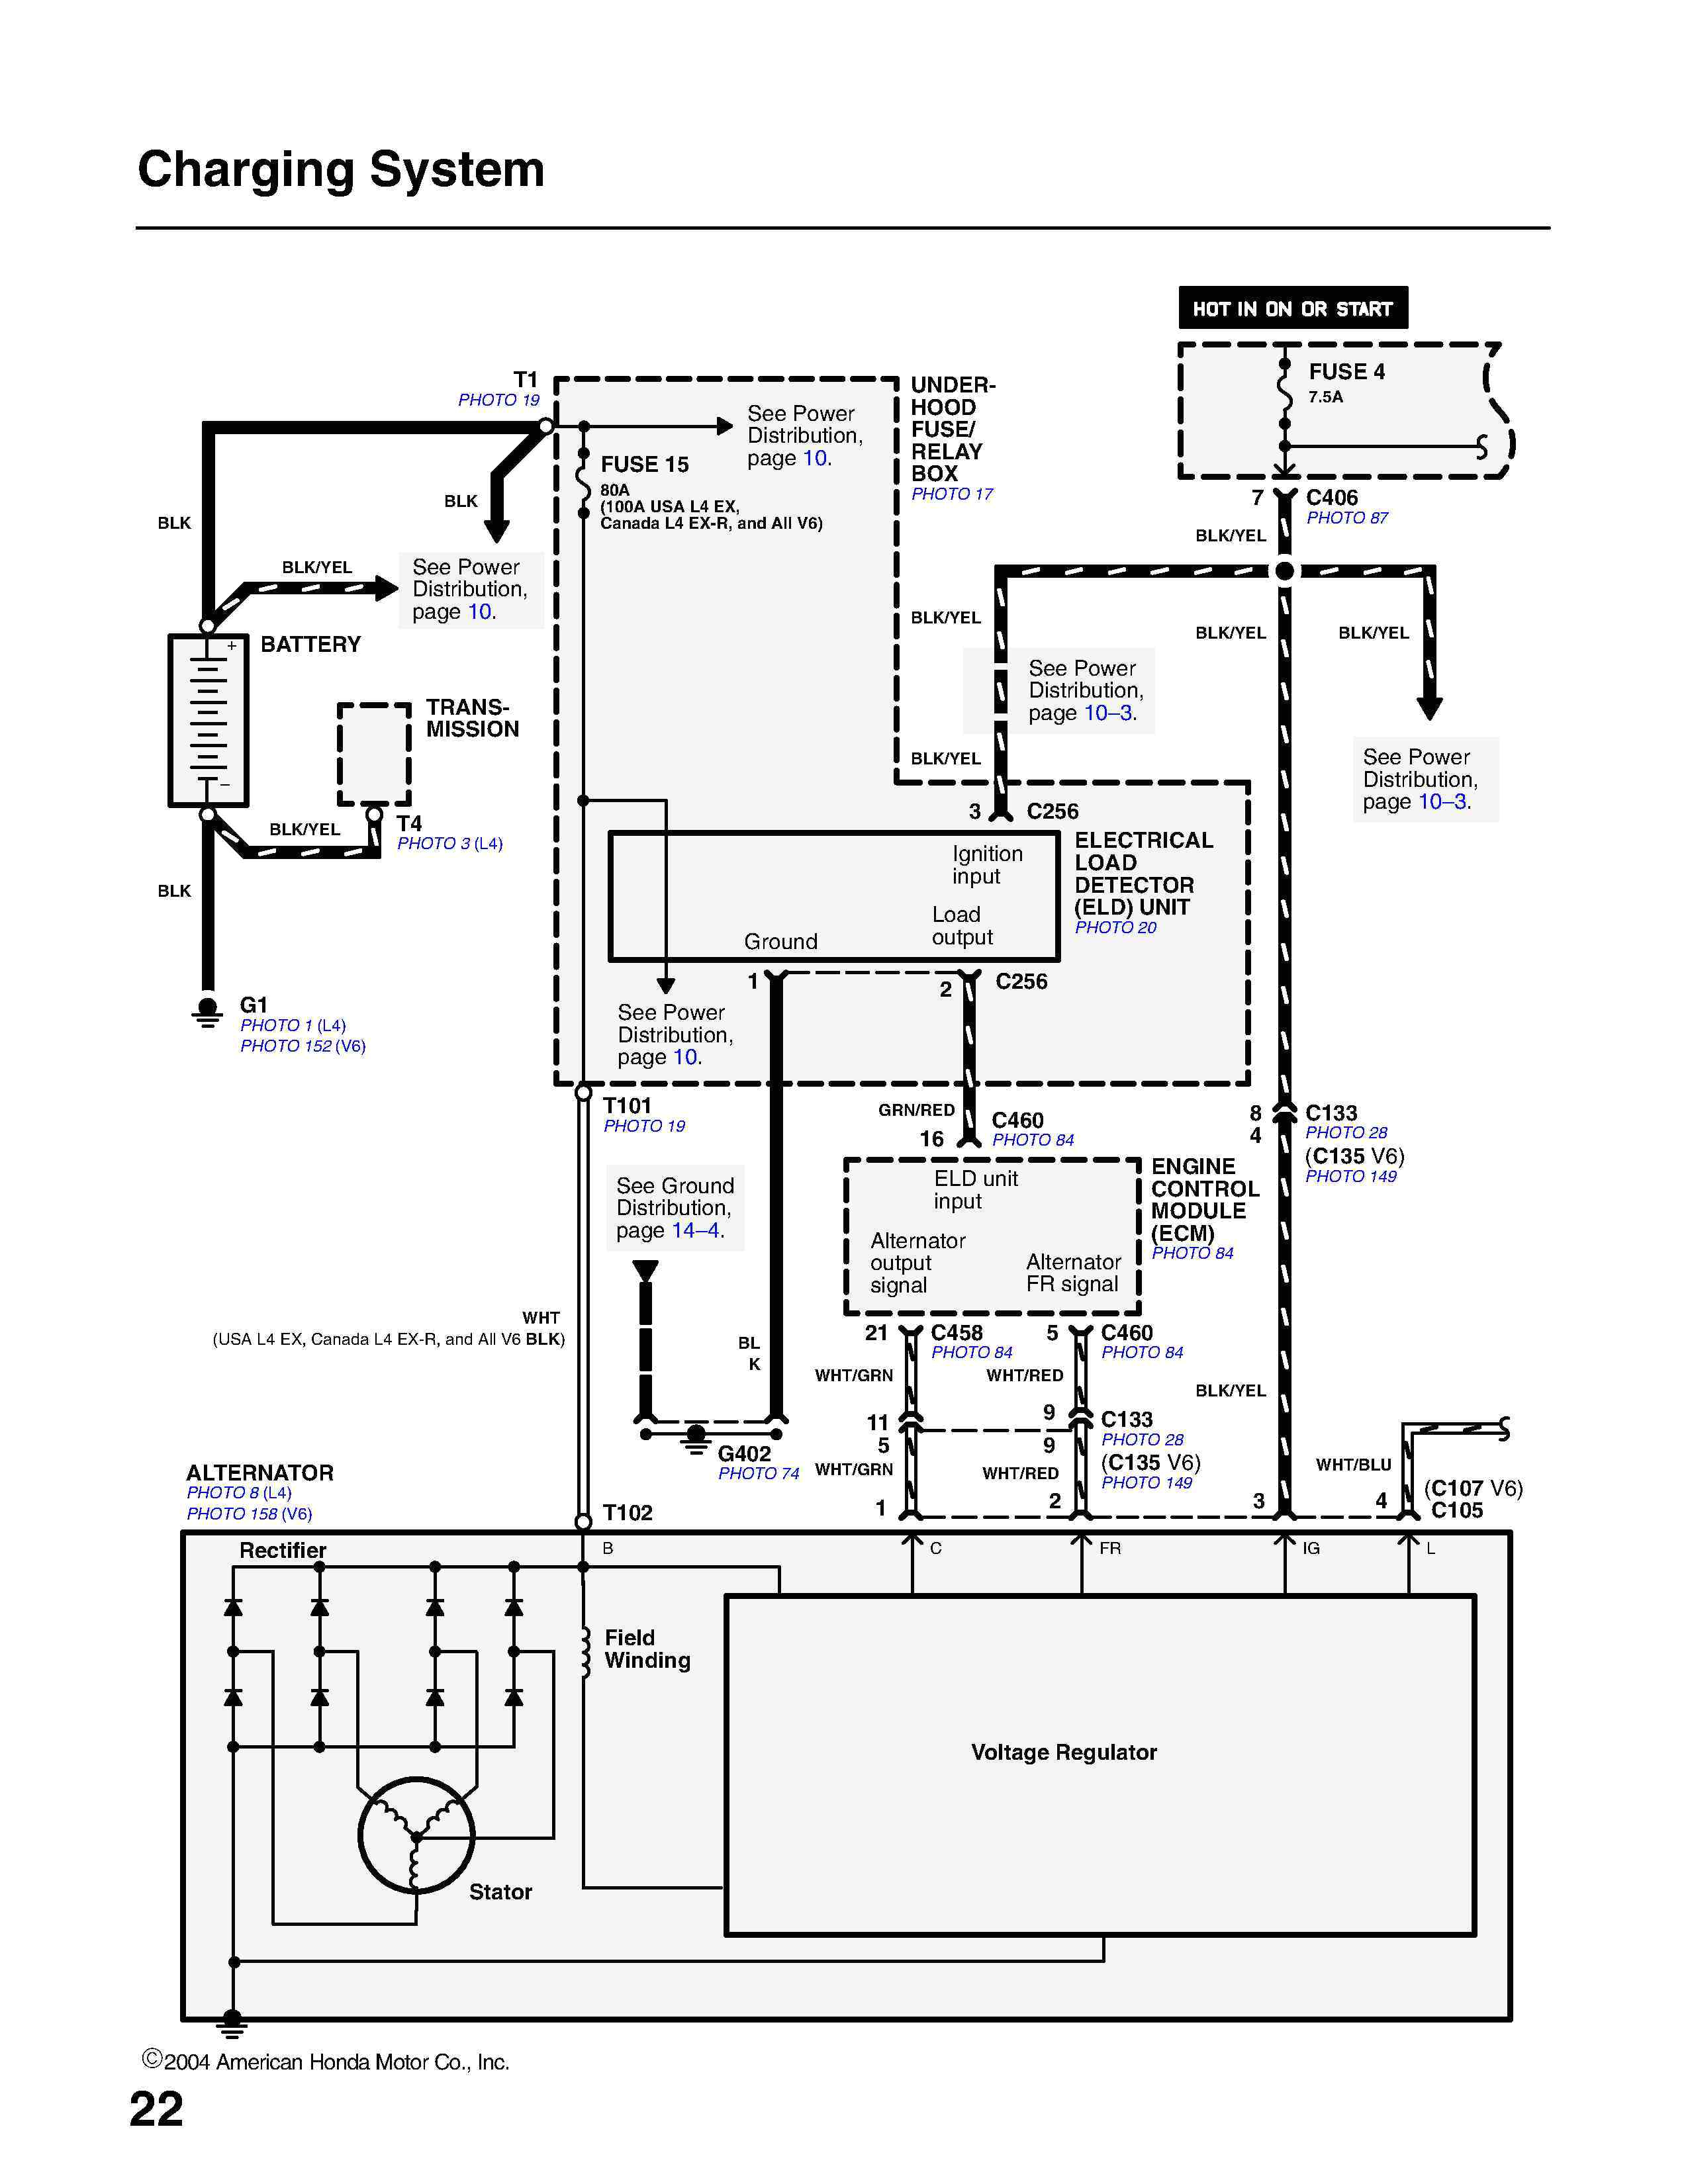 95 honda civic wiring diagrams wiring diagram database 97 honda civic alternator wiring diagram free download